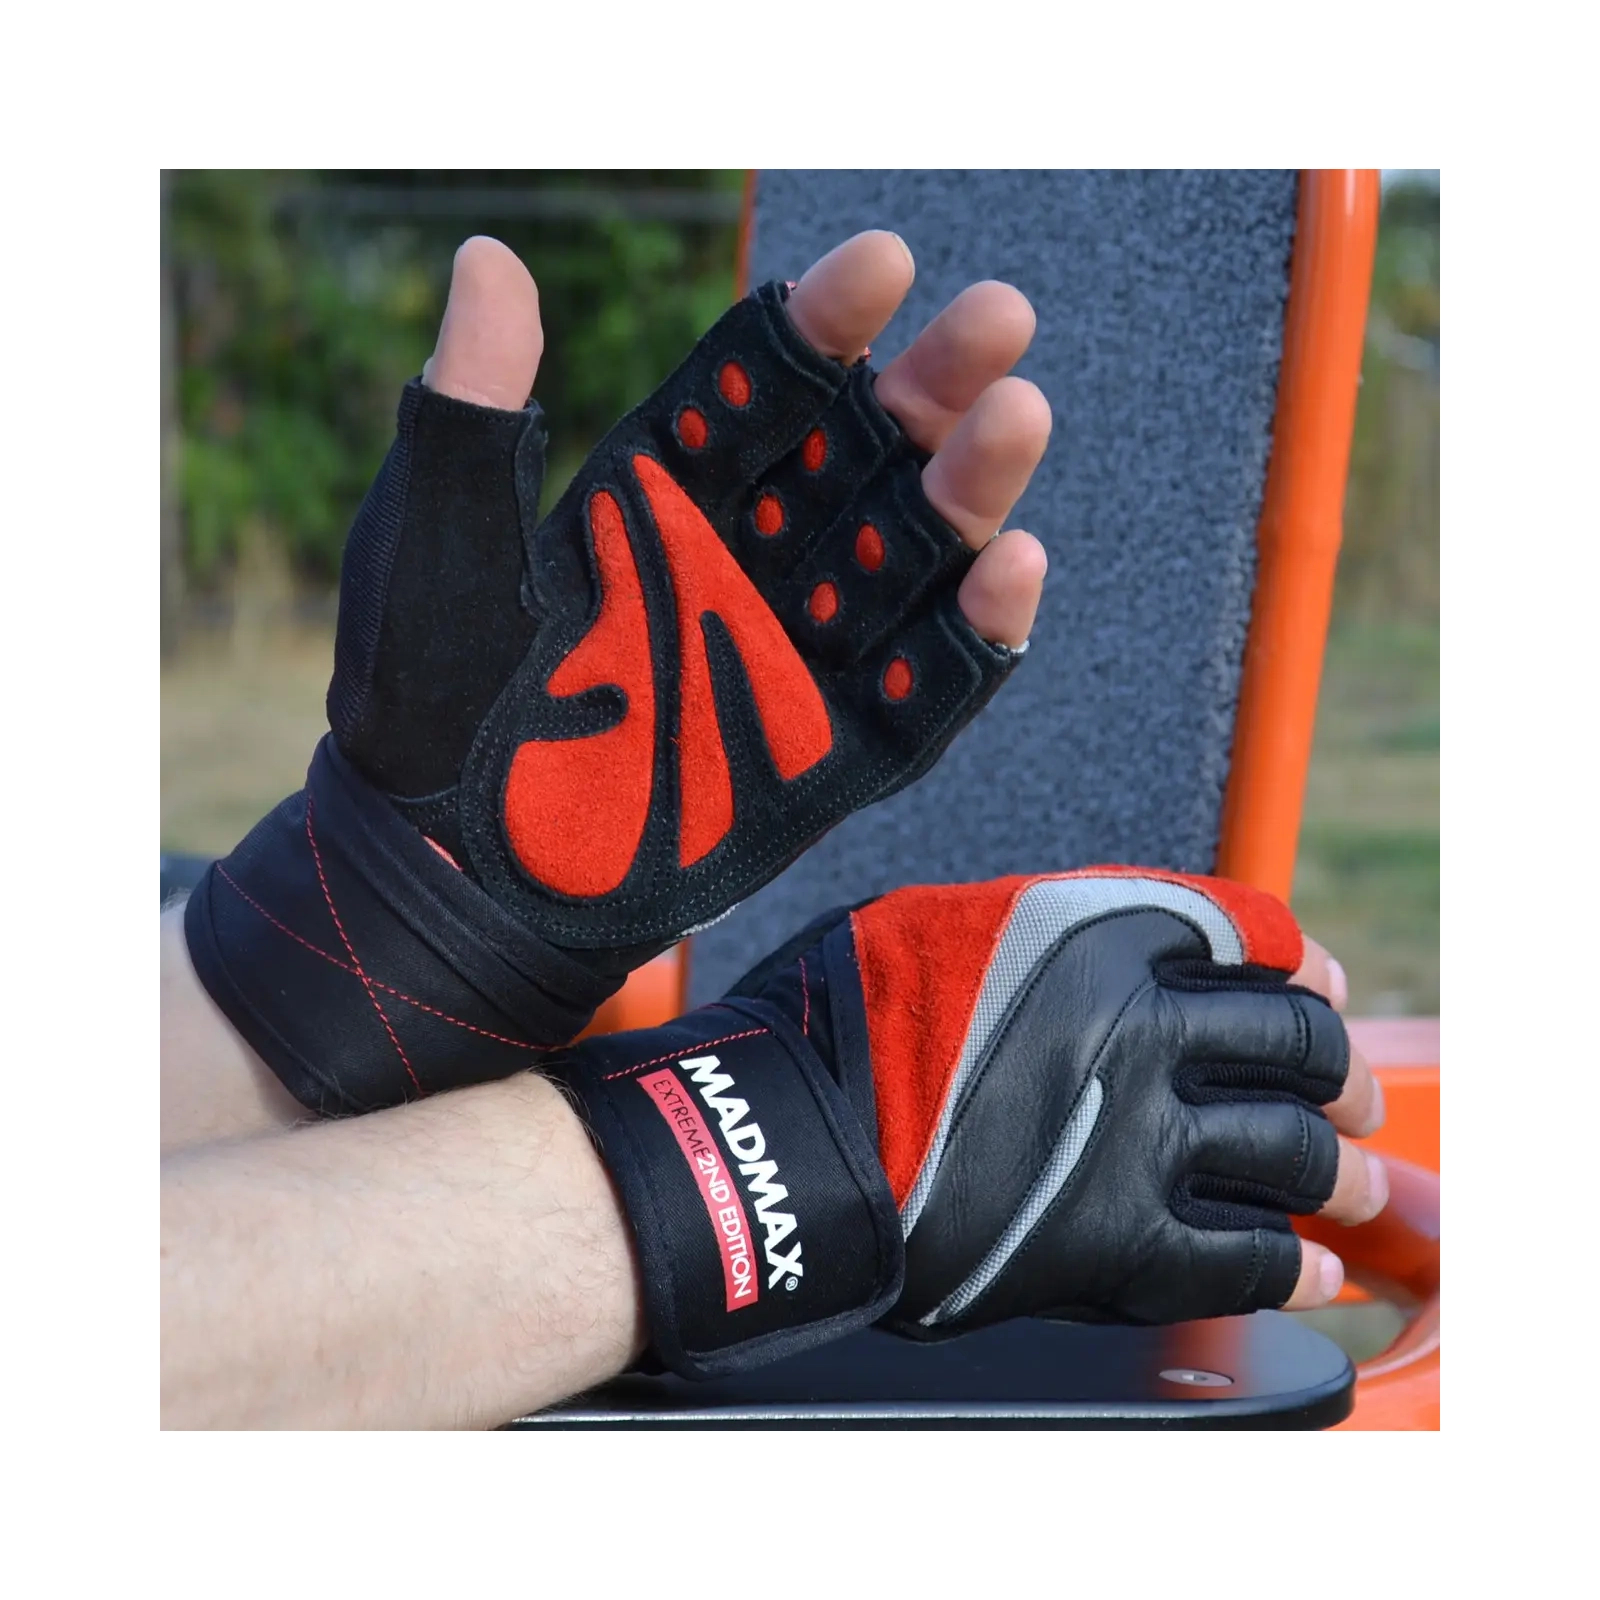 Перчатки для фитнеса MadMax MFG-568 Extreme 2nd edition Black/Red S (MFG-568_S) изображение 4